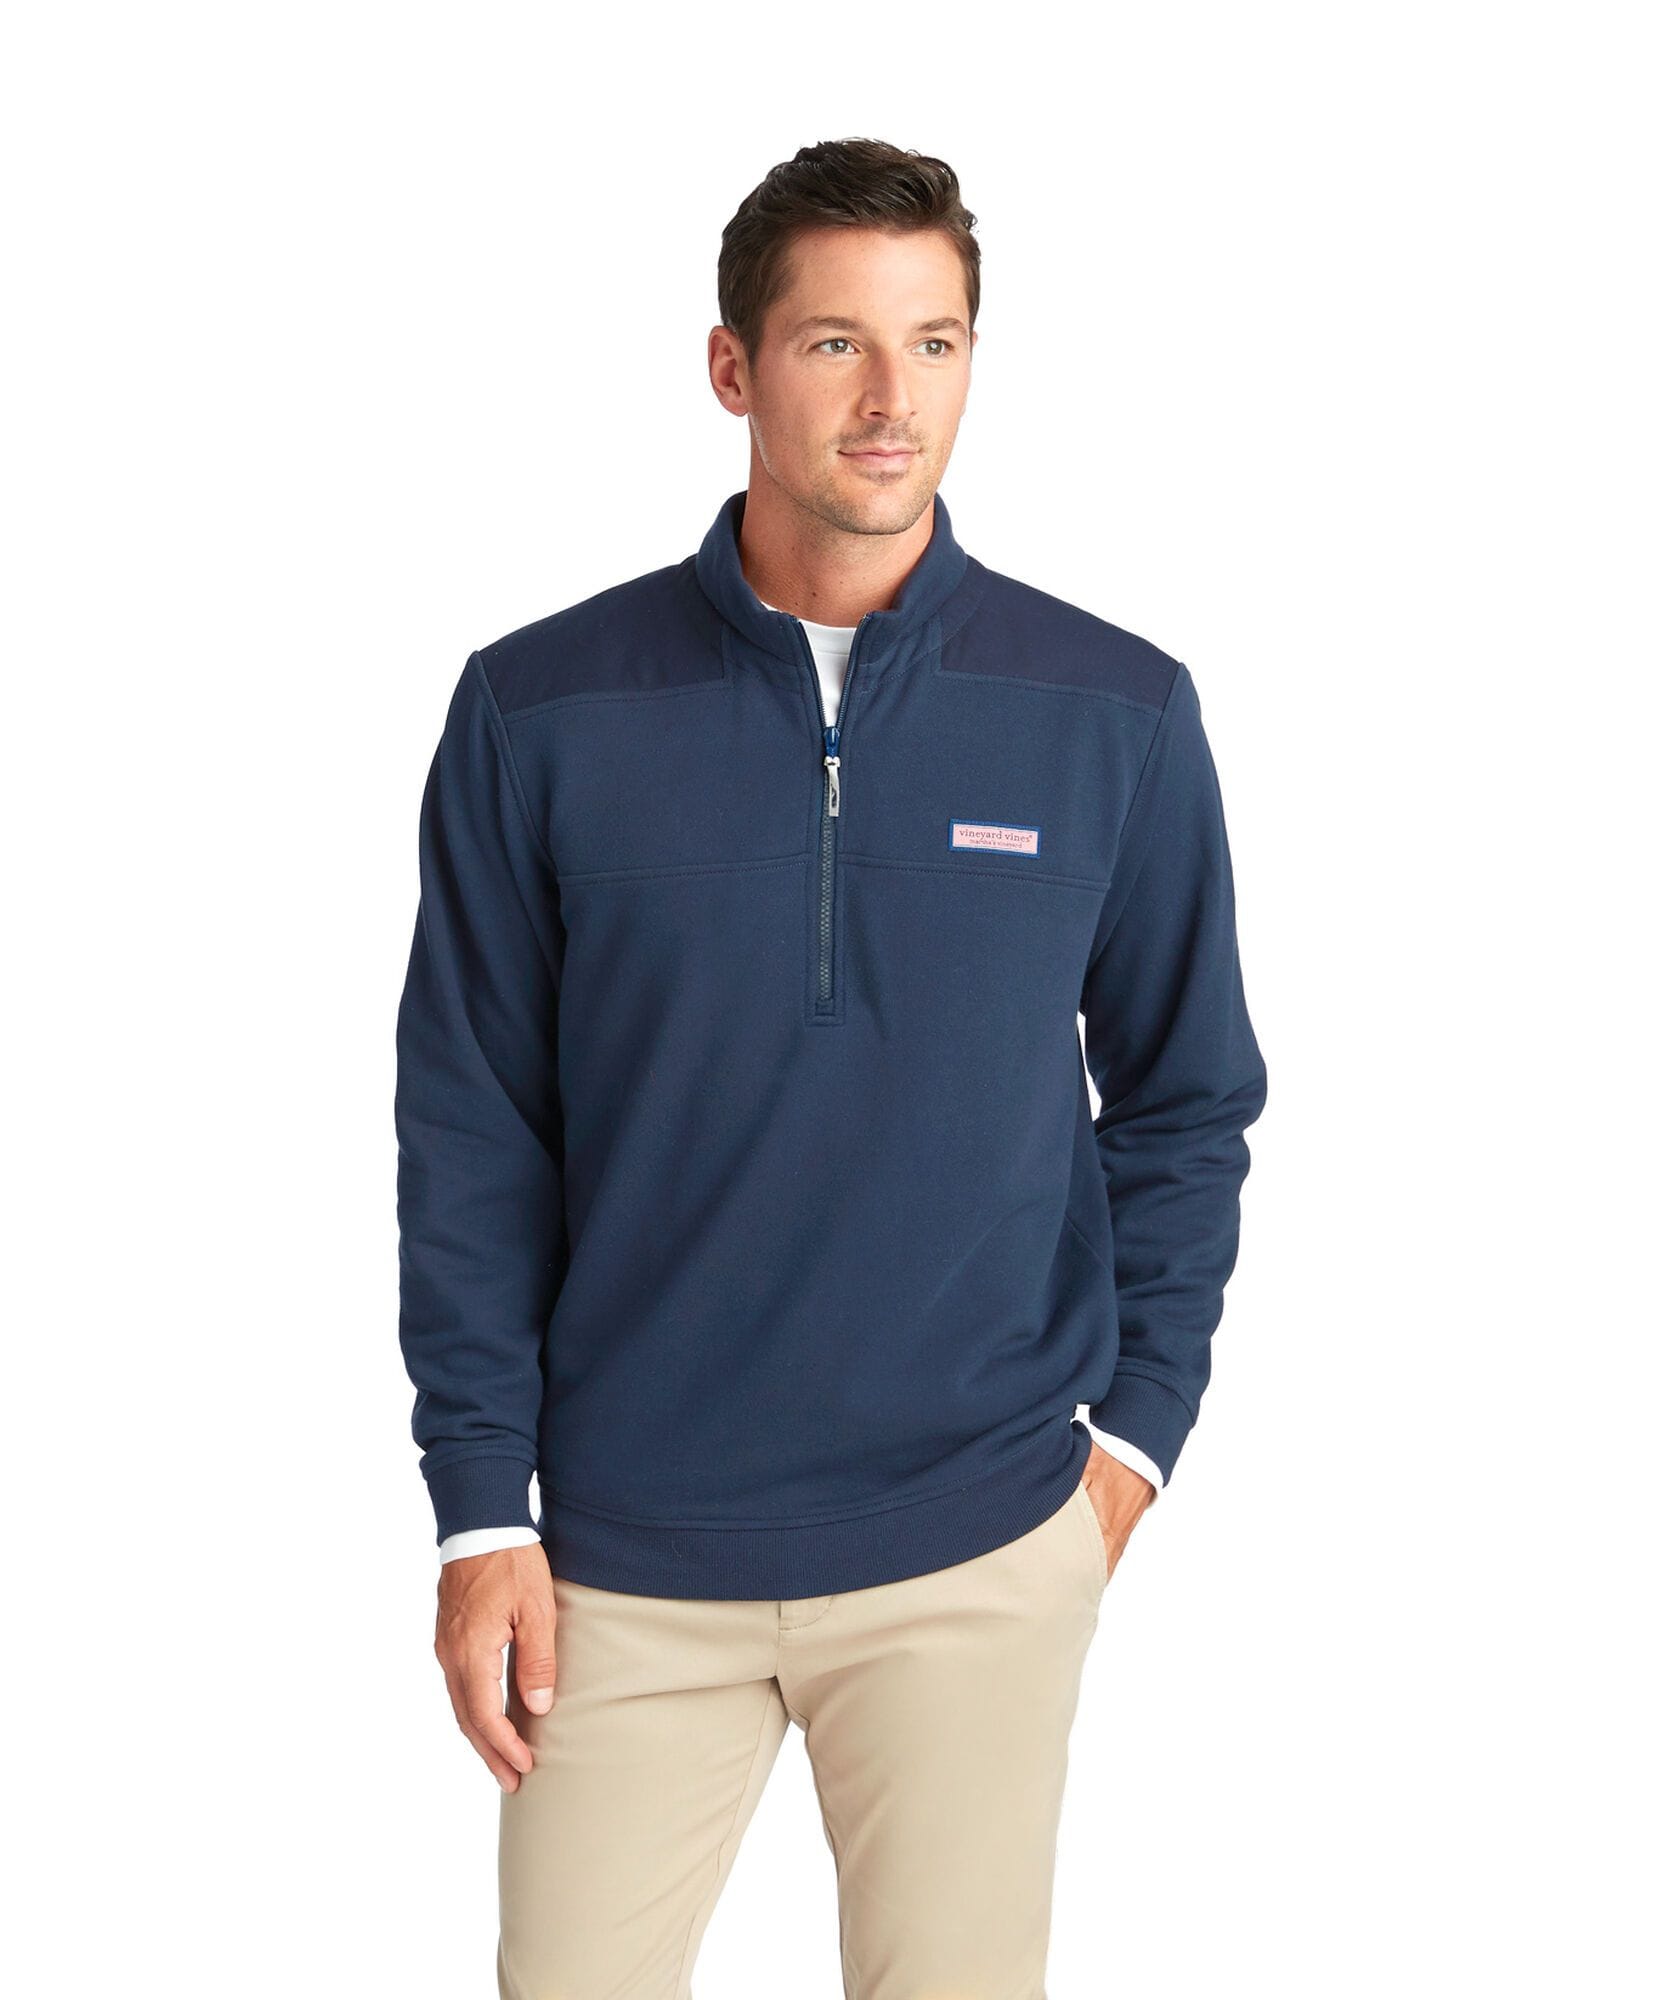  Navy Blue Vineyard Vines, Men's Collegiate Shep Shirt (Multiple Colors)